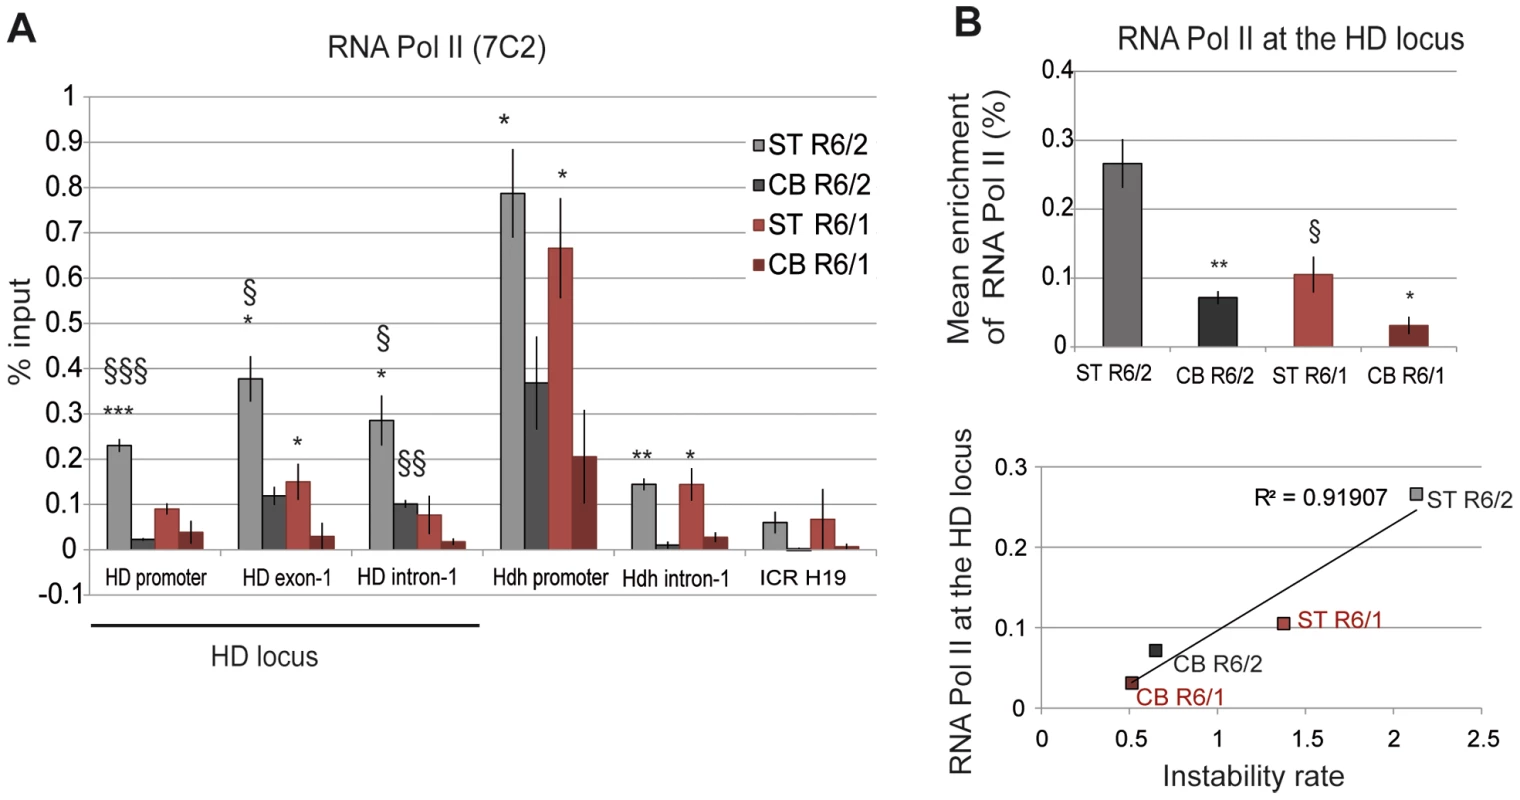 RNA Pol II at the HD locus in R6/1 and R6/2 striatum and cerebellum.